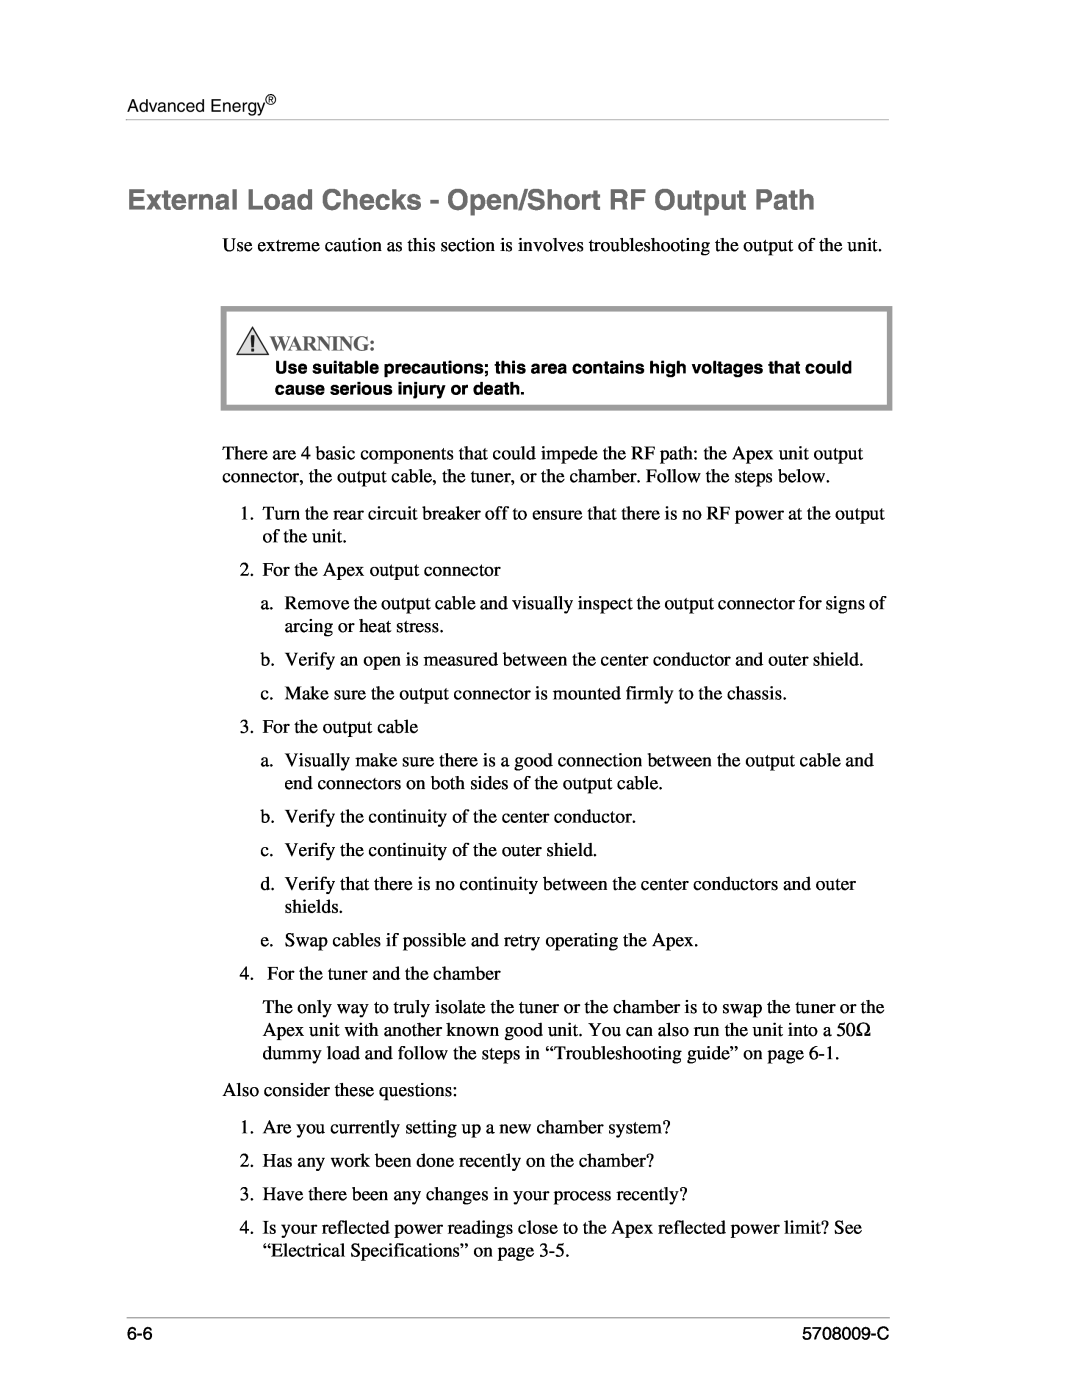 Apex Digital 5708009-C manual External Load Checks - Open/Short RF Output Path 